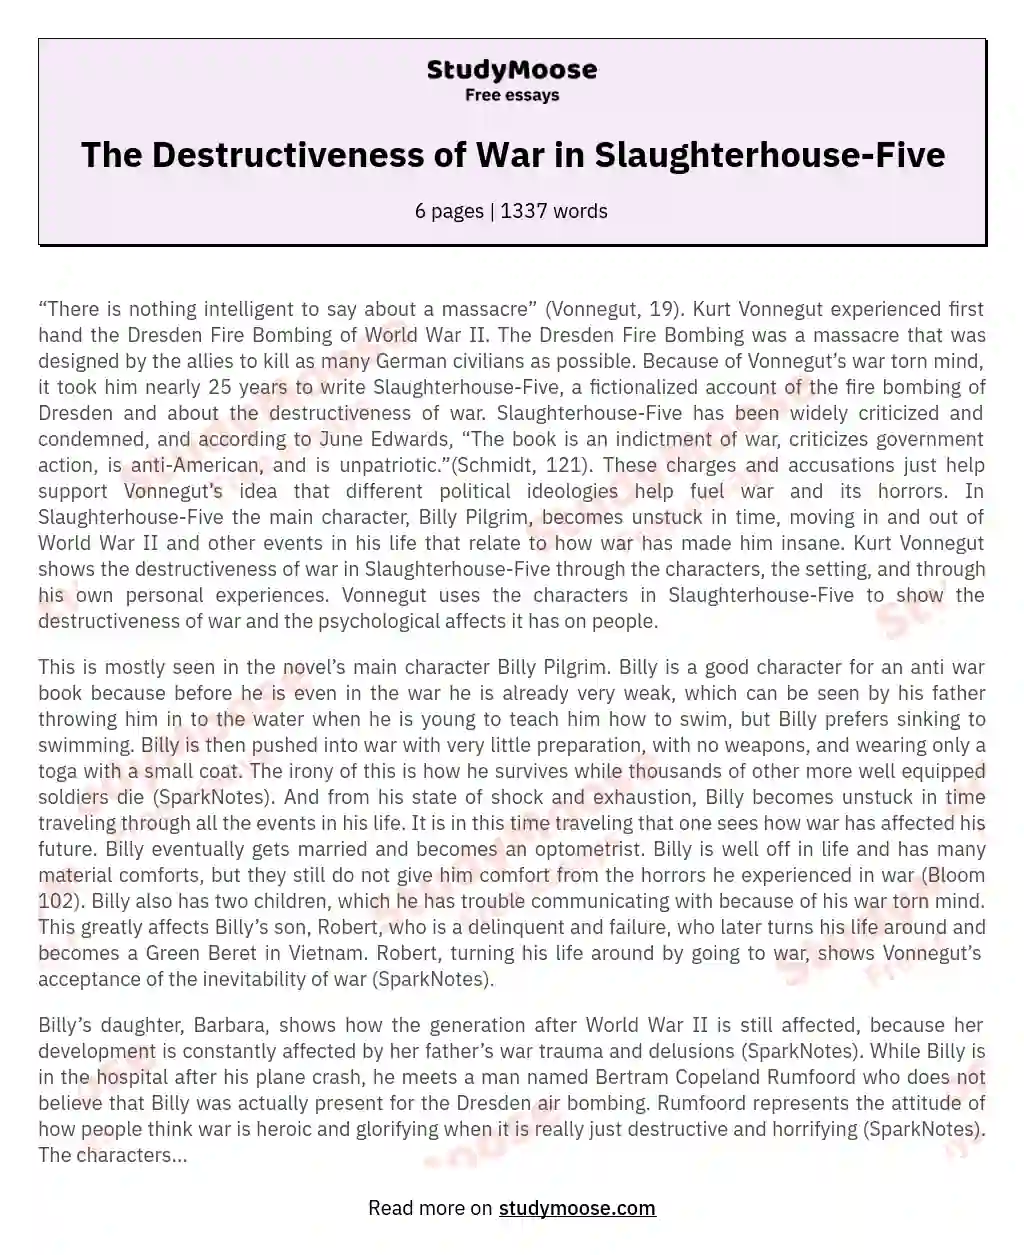 The Destructiveness of War in Slaughterhouse-Five